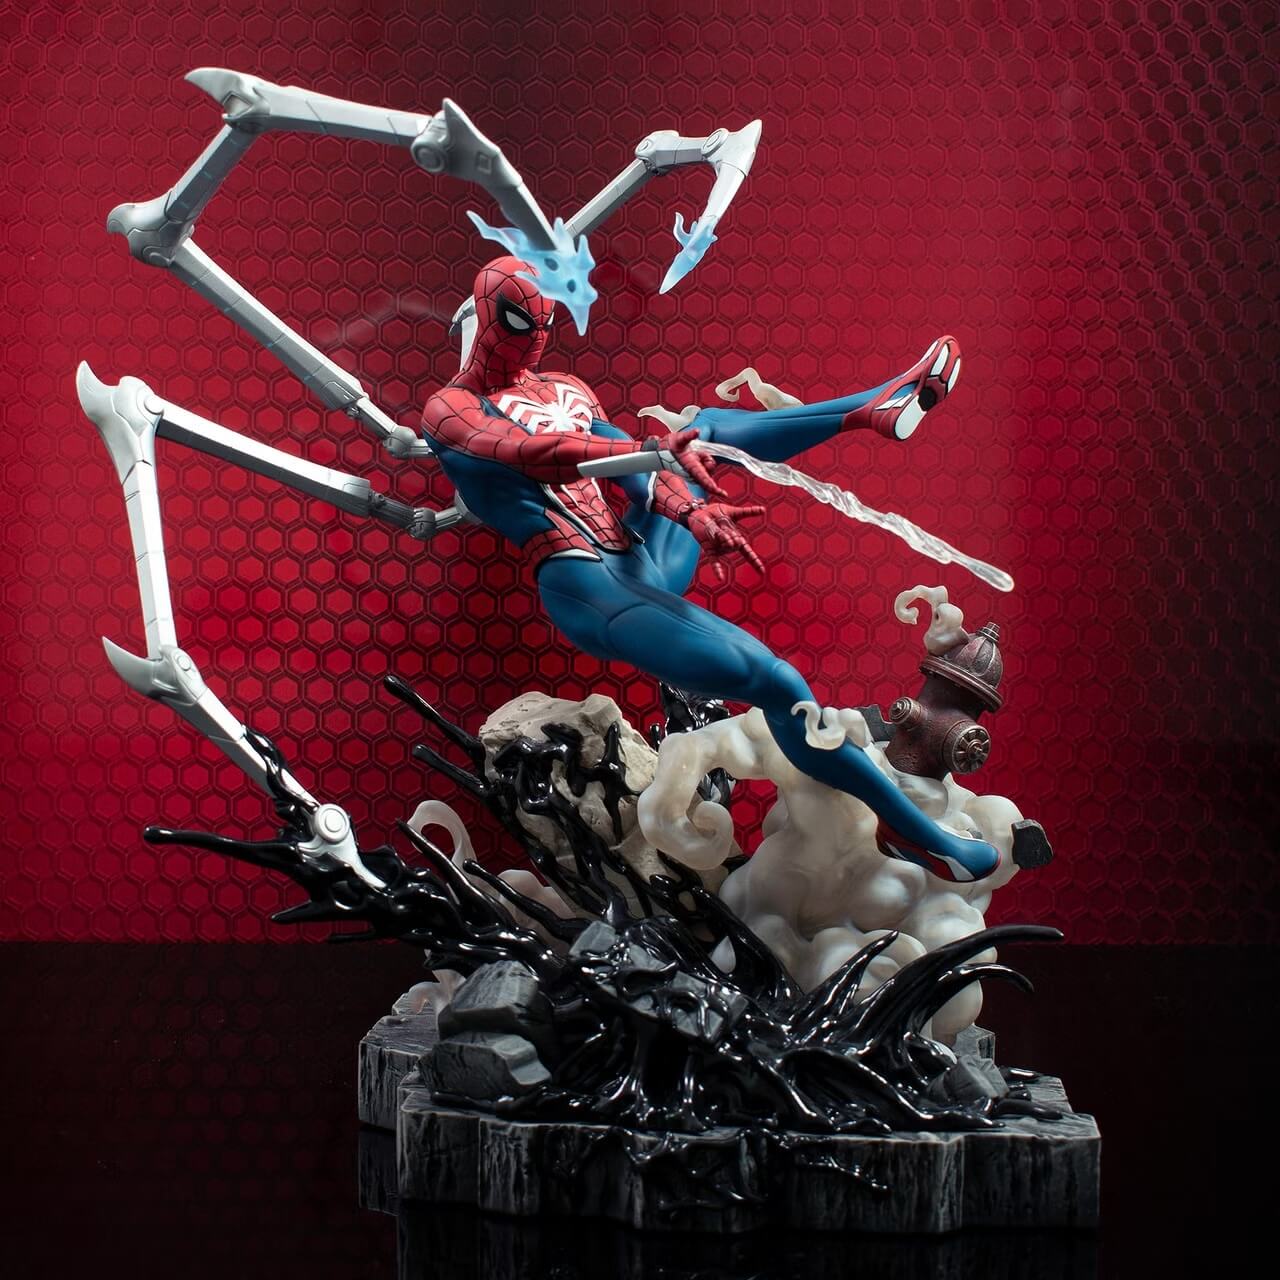 Revelado o Diorama Deluxe Gallery de Marvel's Spider-Man 2 pela Diamond Select Toys